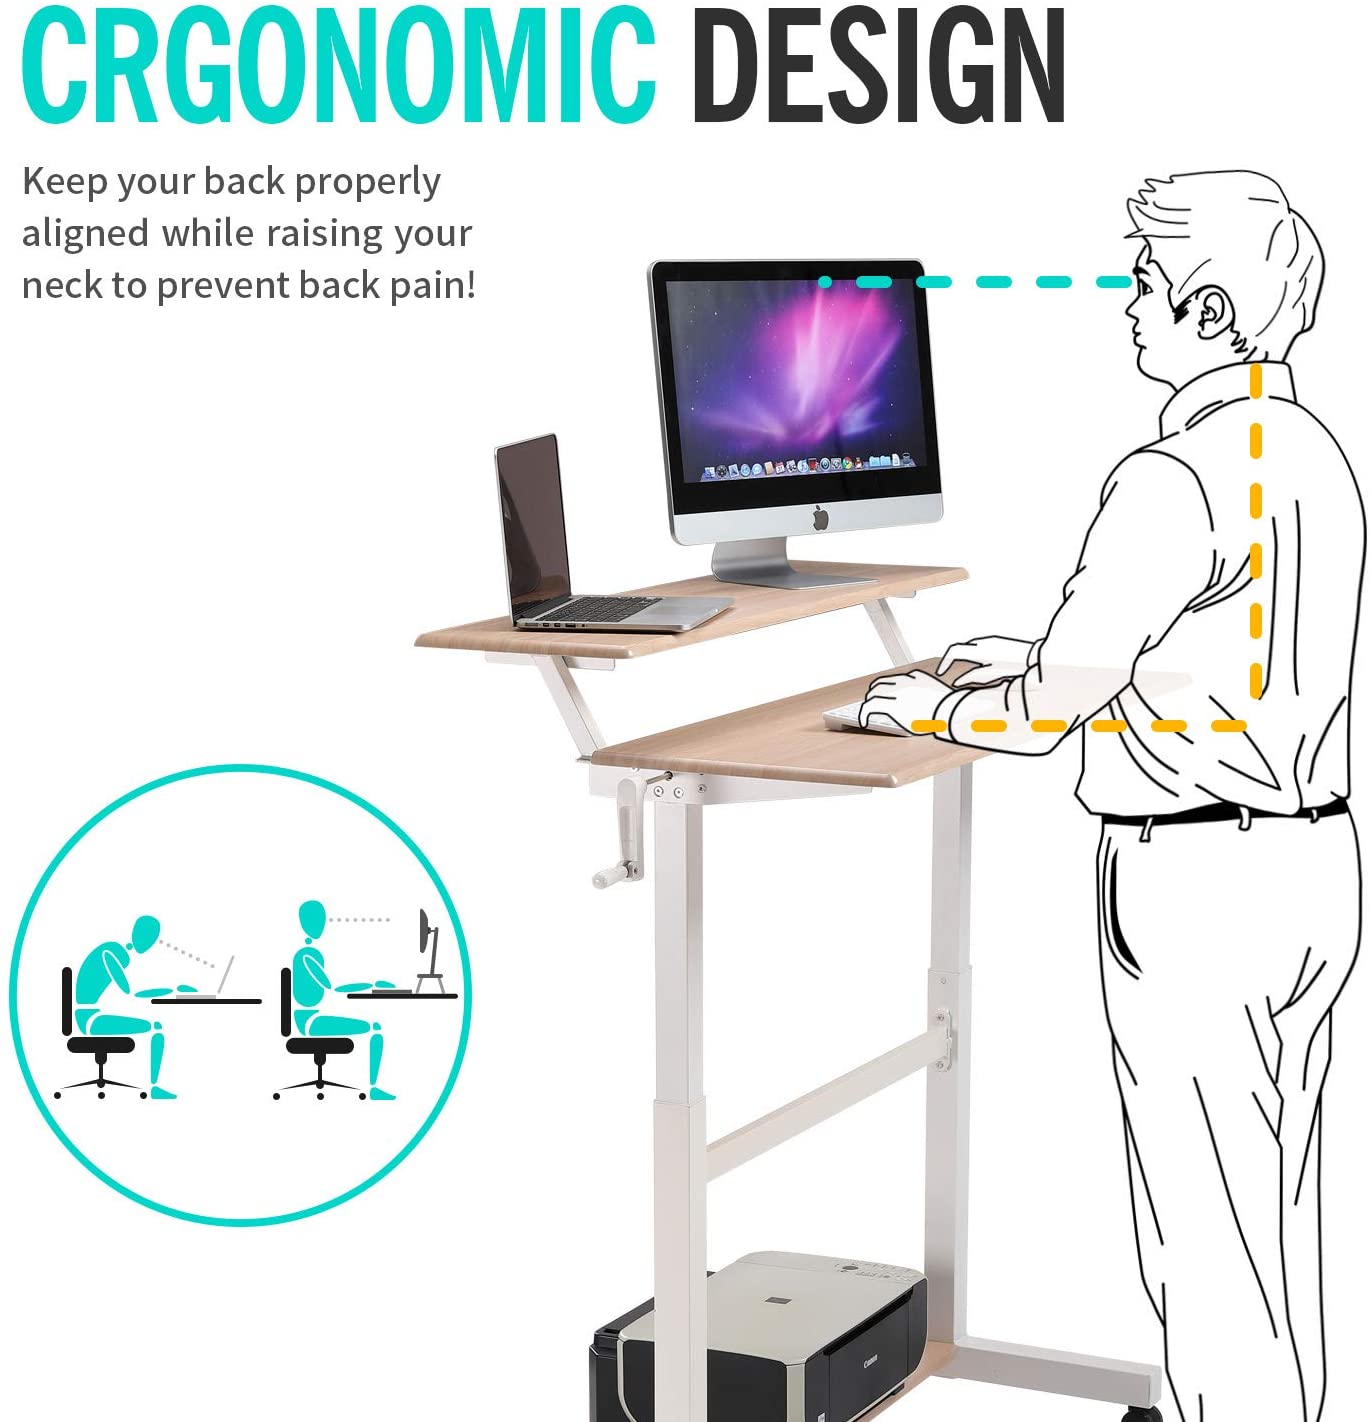 UNICOO – Crank Adjustable Height Standing Desk, 2 Tier Adjustable Sit to Stand up Desk, Mobile Standing Desk, Rolling Desk 2T-Crank